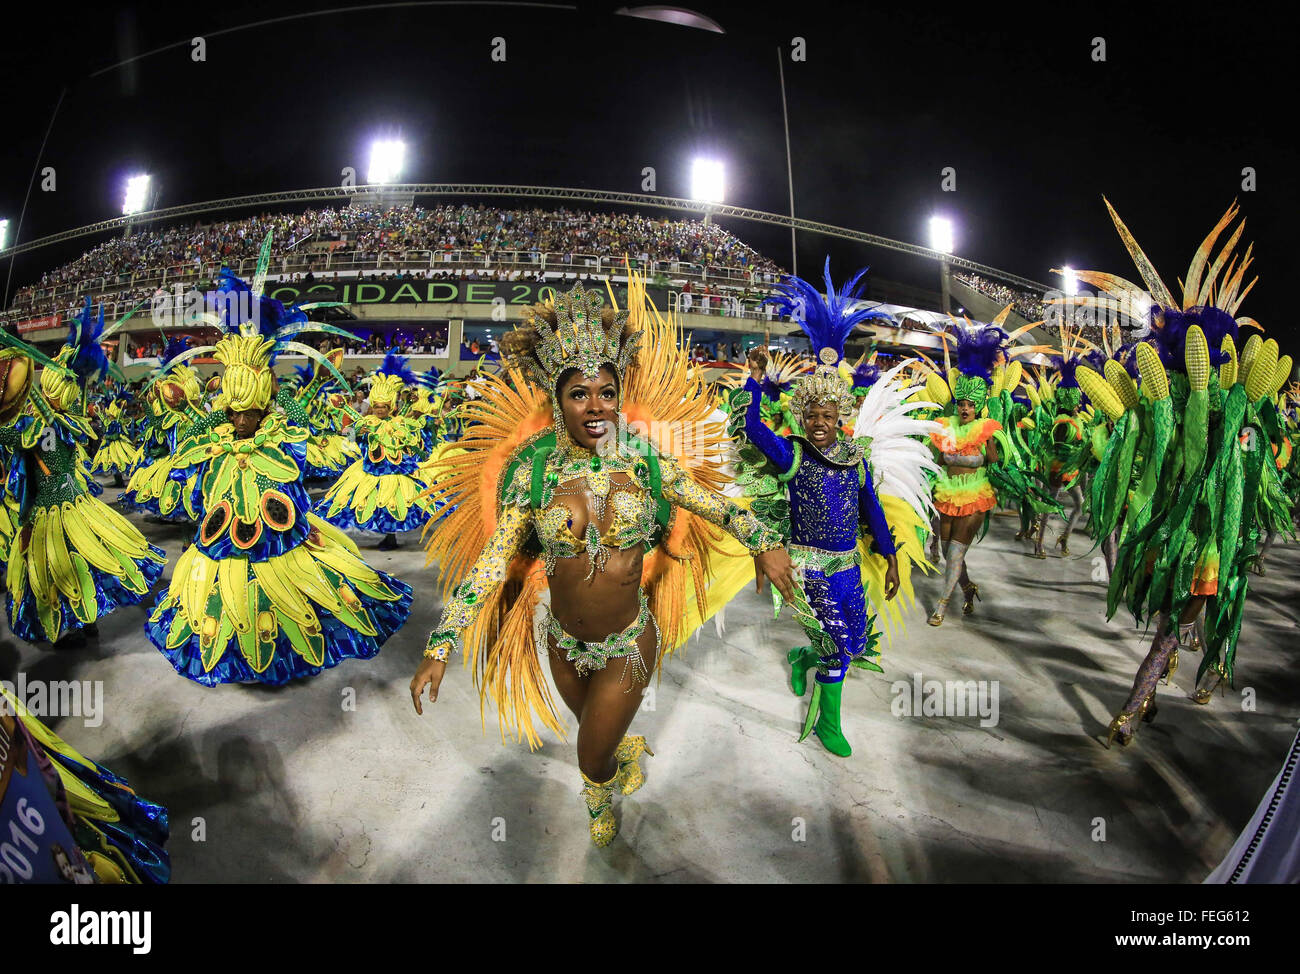 Rio De Janeiro, Brazil. 6th Feb, 2016. Dancers of Paraiso do Tuiuti Samba School perform during the Carnival in the Marques de Sapucai Sambadrome in Rio de Janeiro, Brazil, Feb. 6, 2016. © AGENCIA ESTADO/Xinhua/Alamy Live News Stock Photo